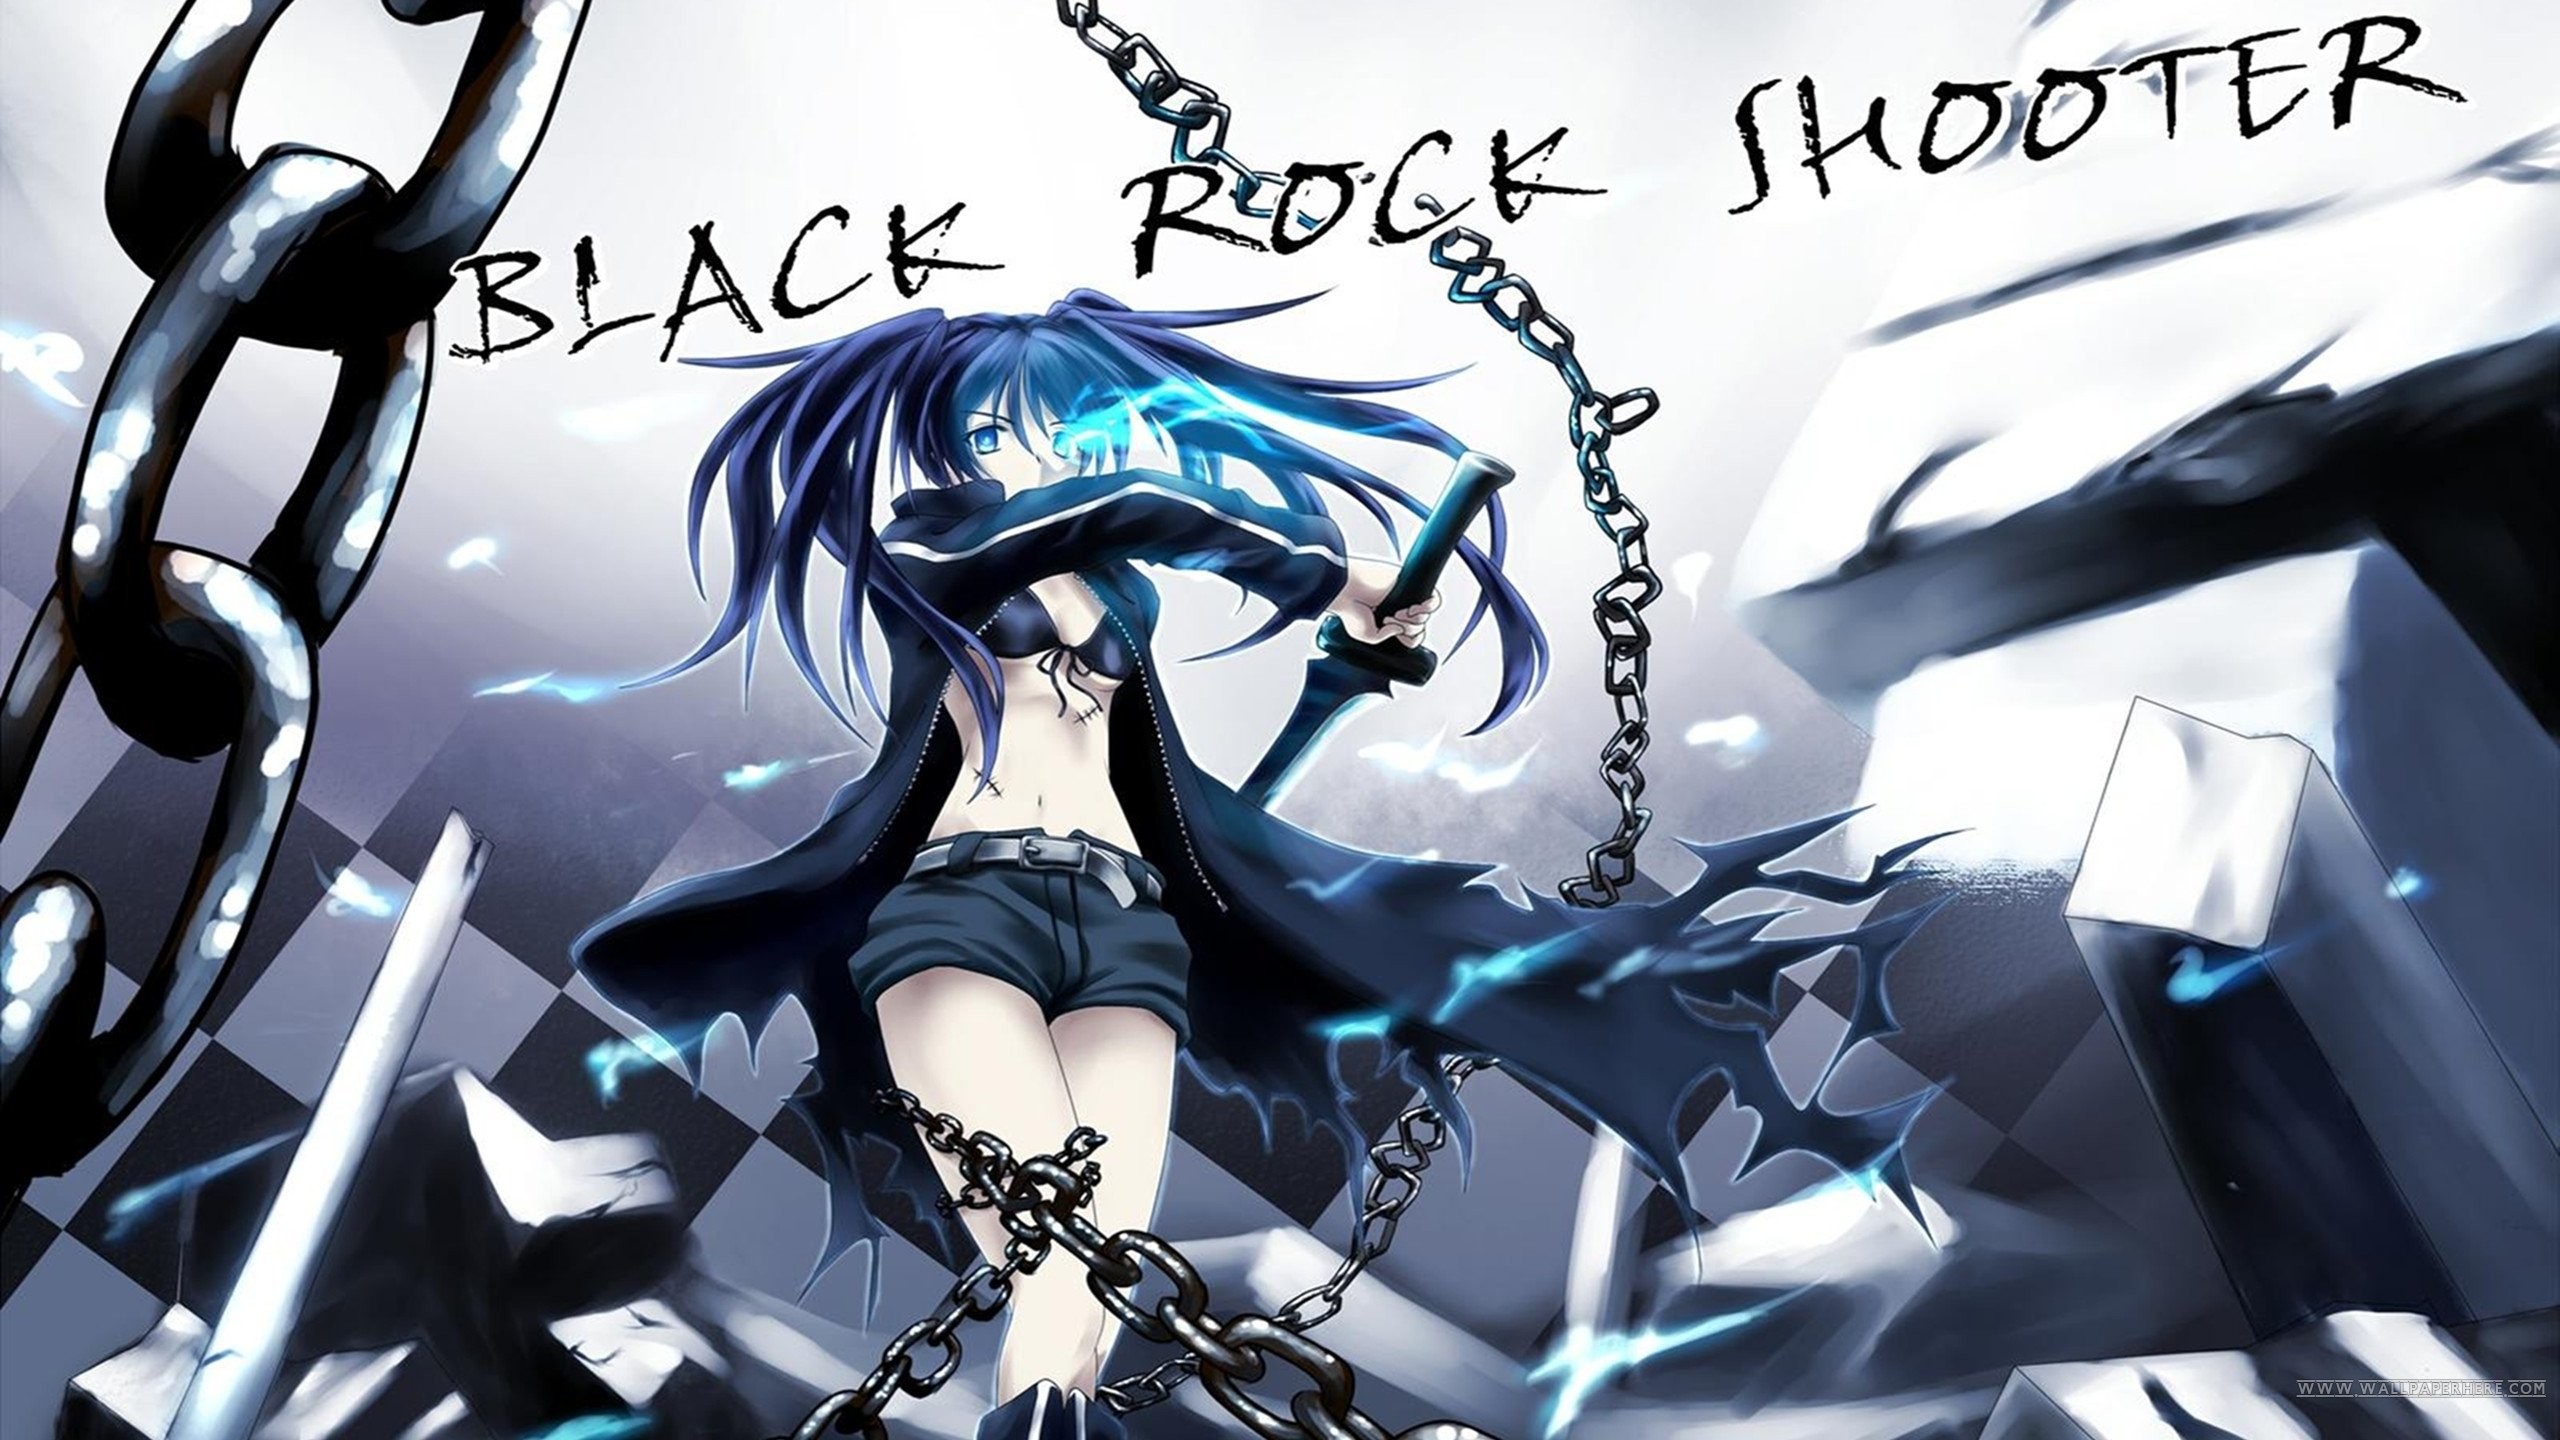 black rock shooter wallpaper,karikatur,cg kunstwerk,anime,schwarzes haar,grafikdesign